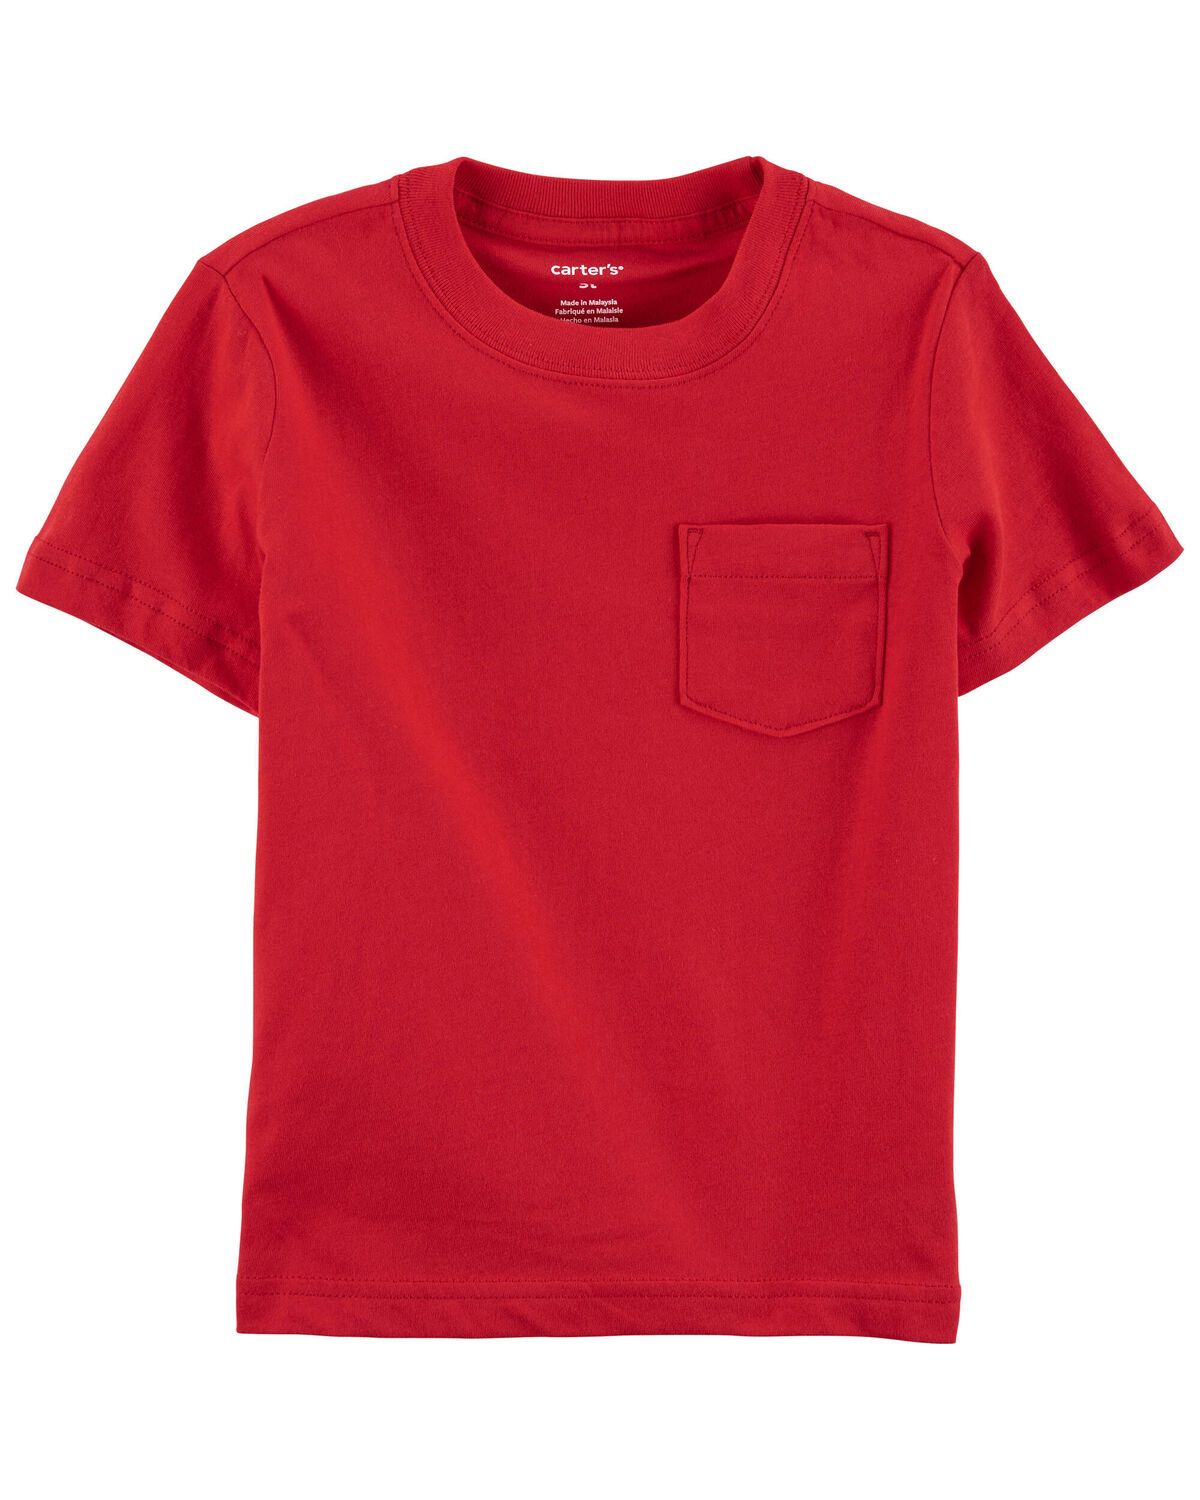 Red Baby Pocket Jersey Tee | carters.com | Carter's